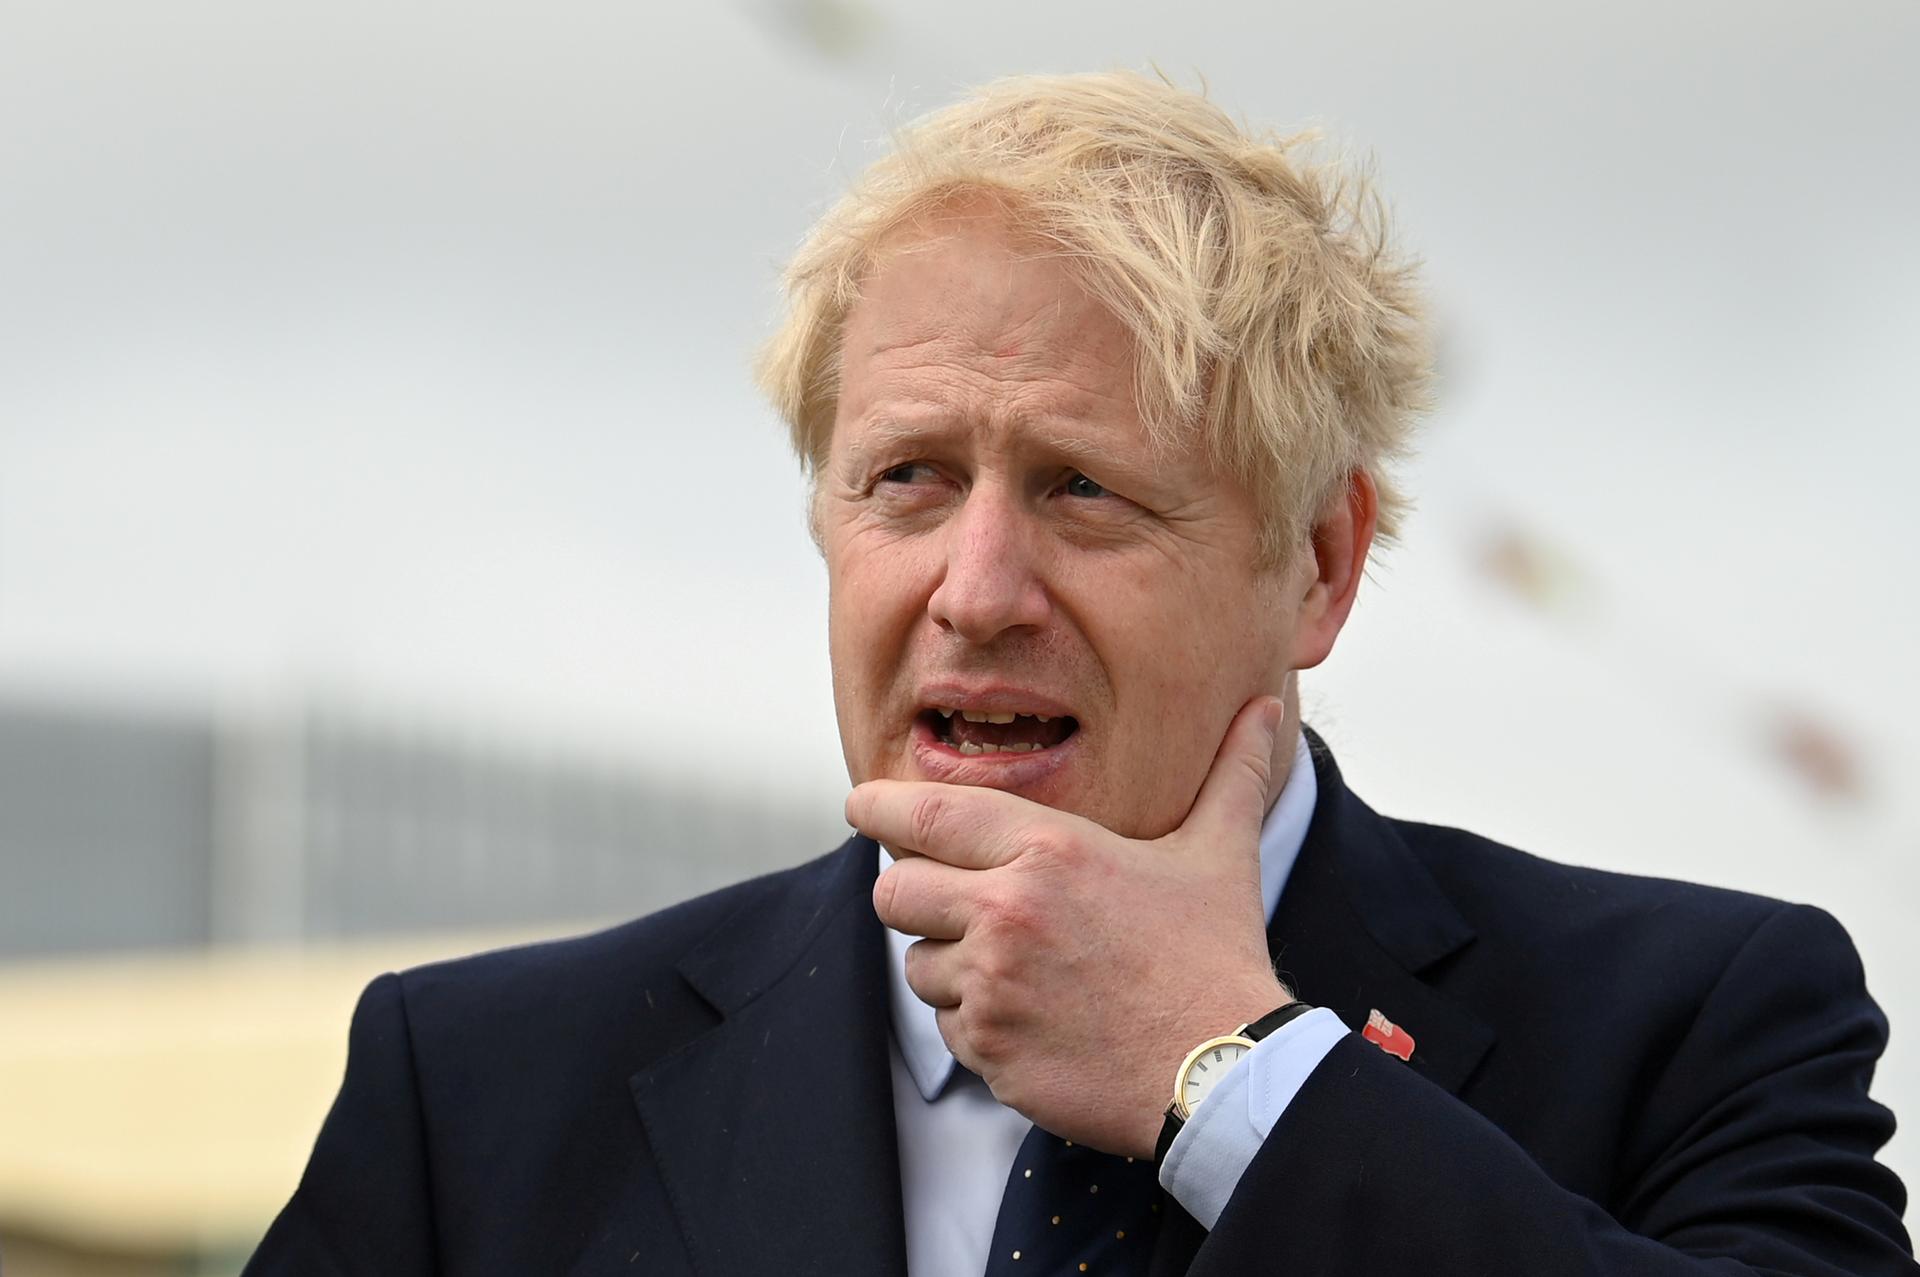 Johnson, likening himself to Incredible Hulk, vows Oct. 31 Brexit